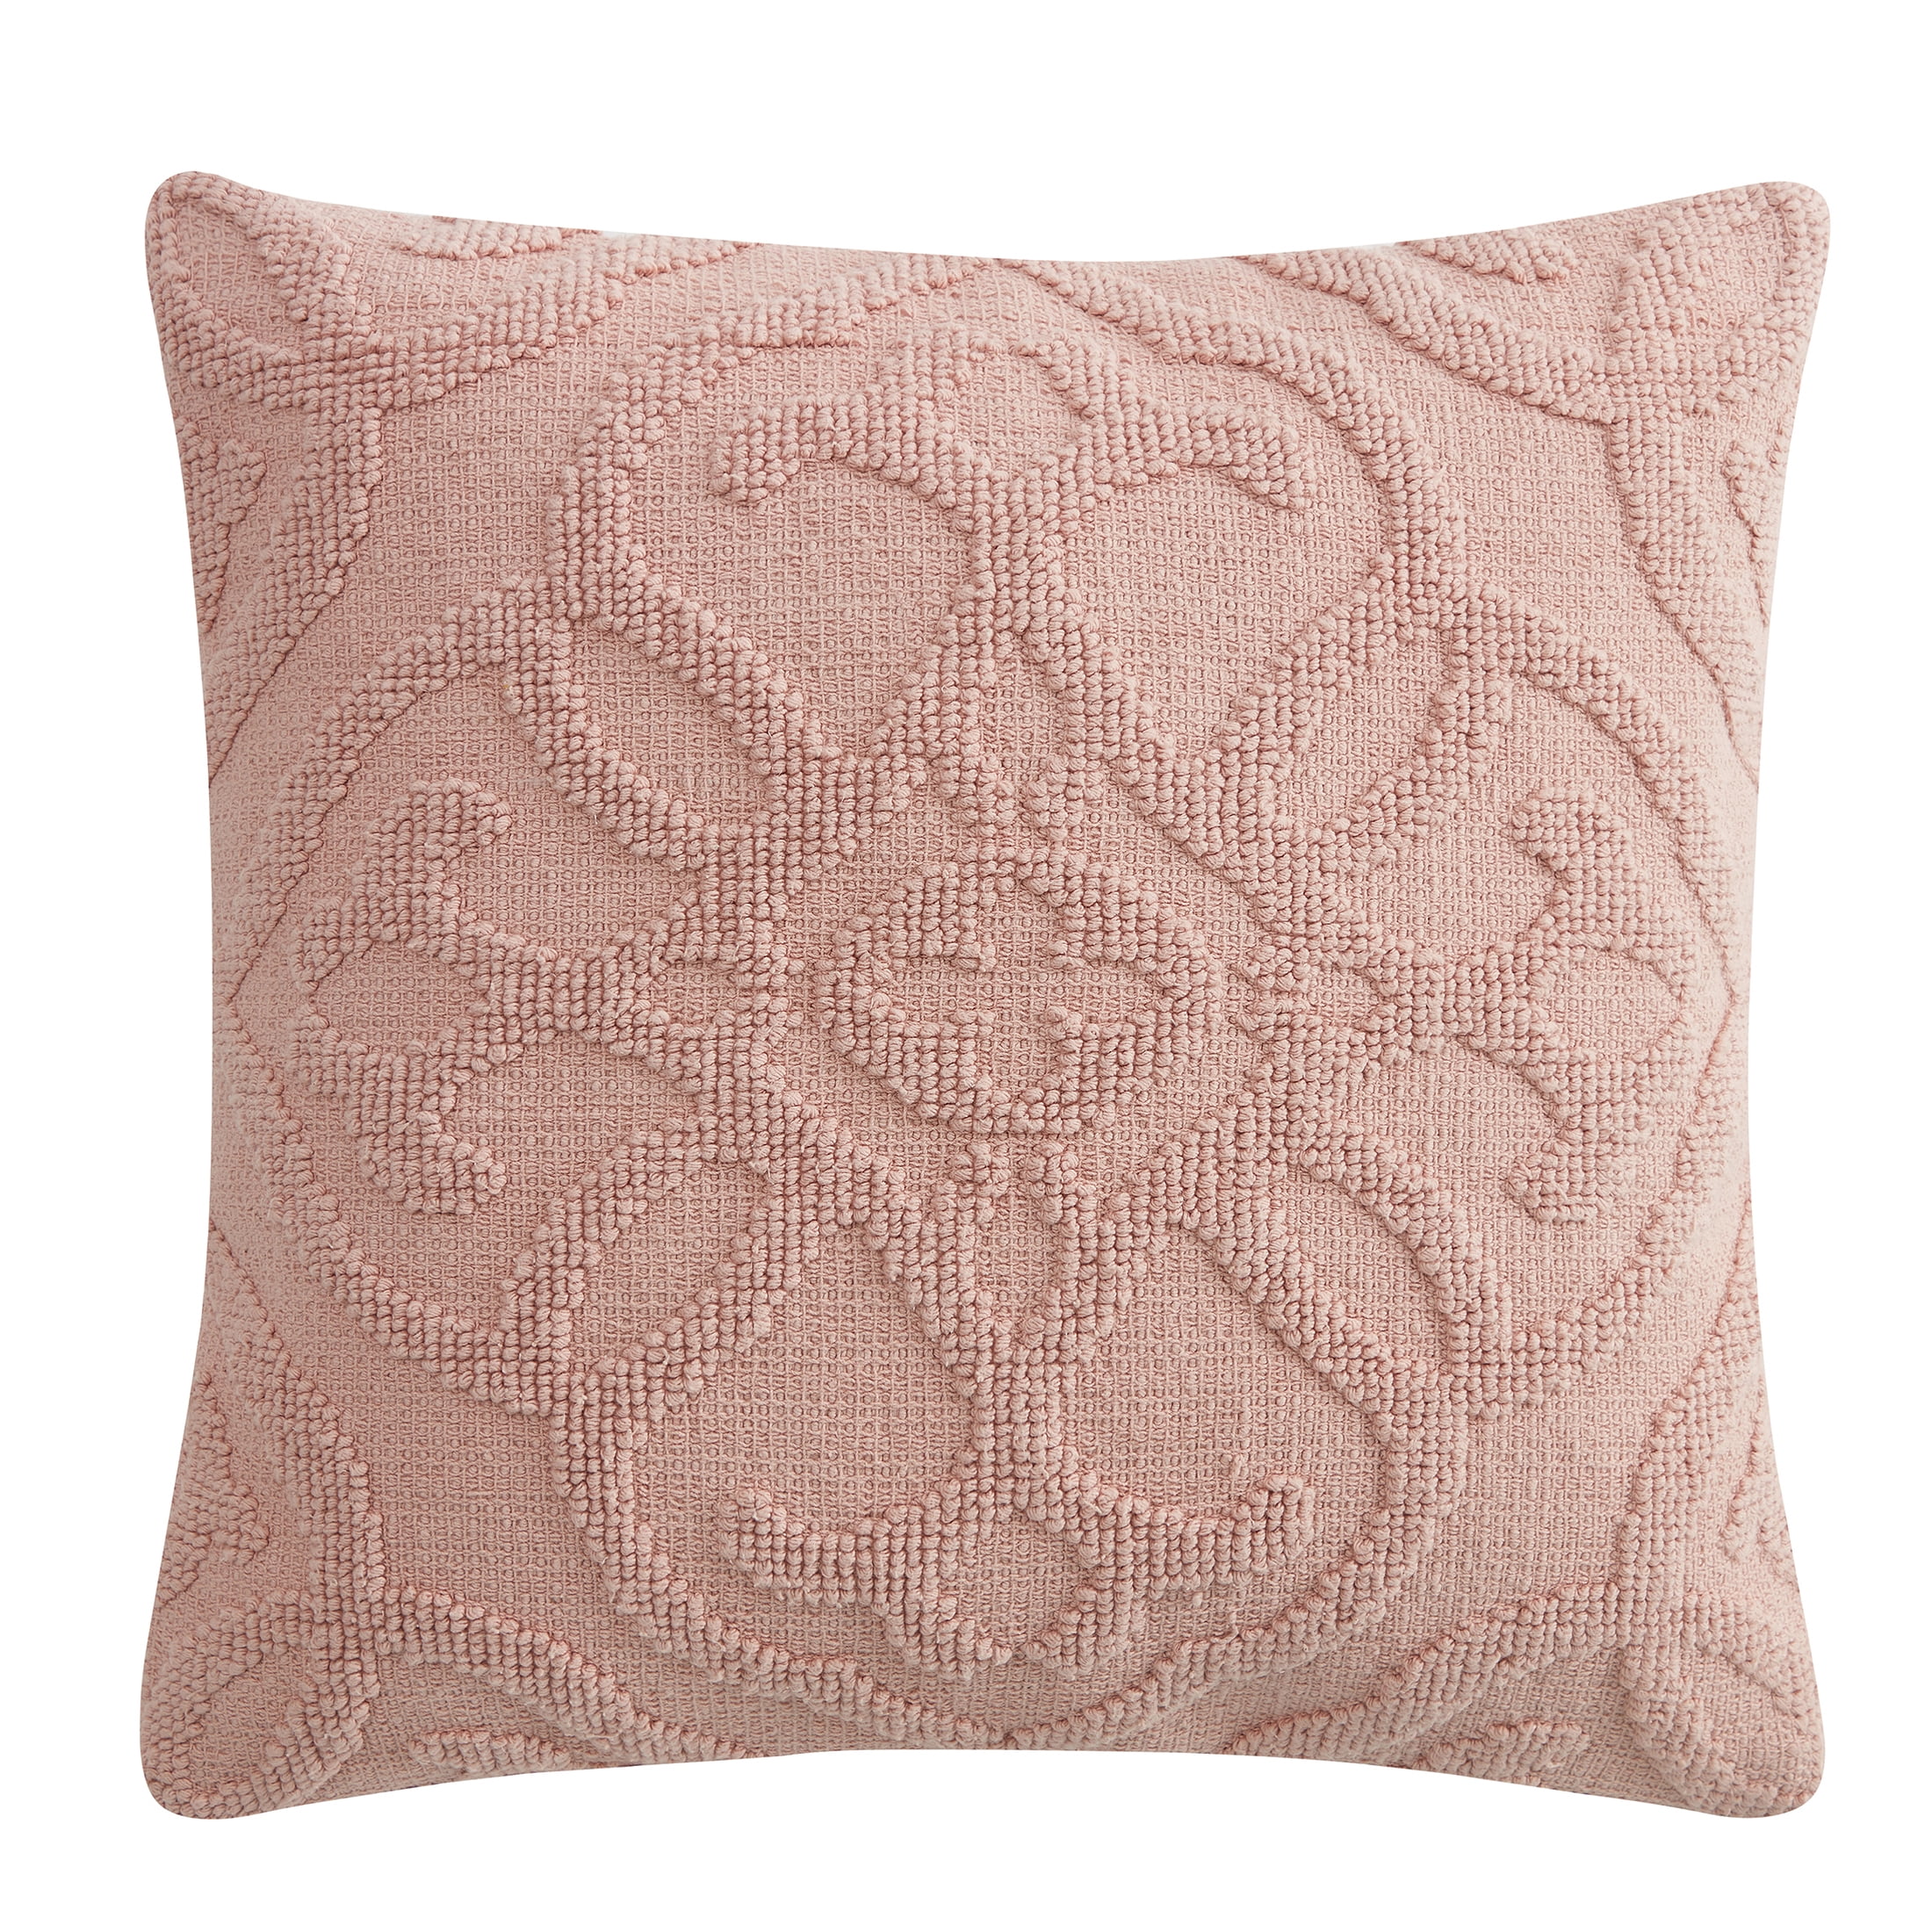 Home Decorative Cushion Cover 100% Cotton Square Floral Pillow Sofa Case 